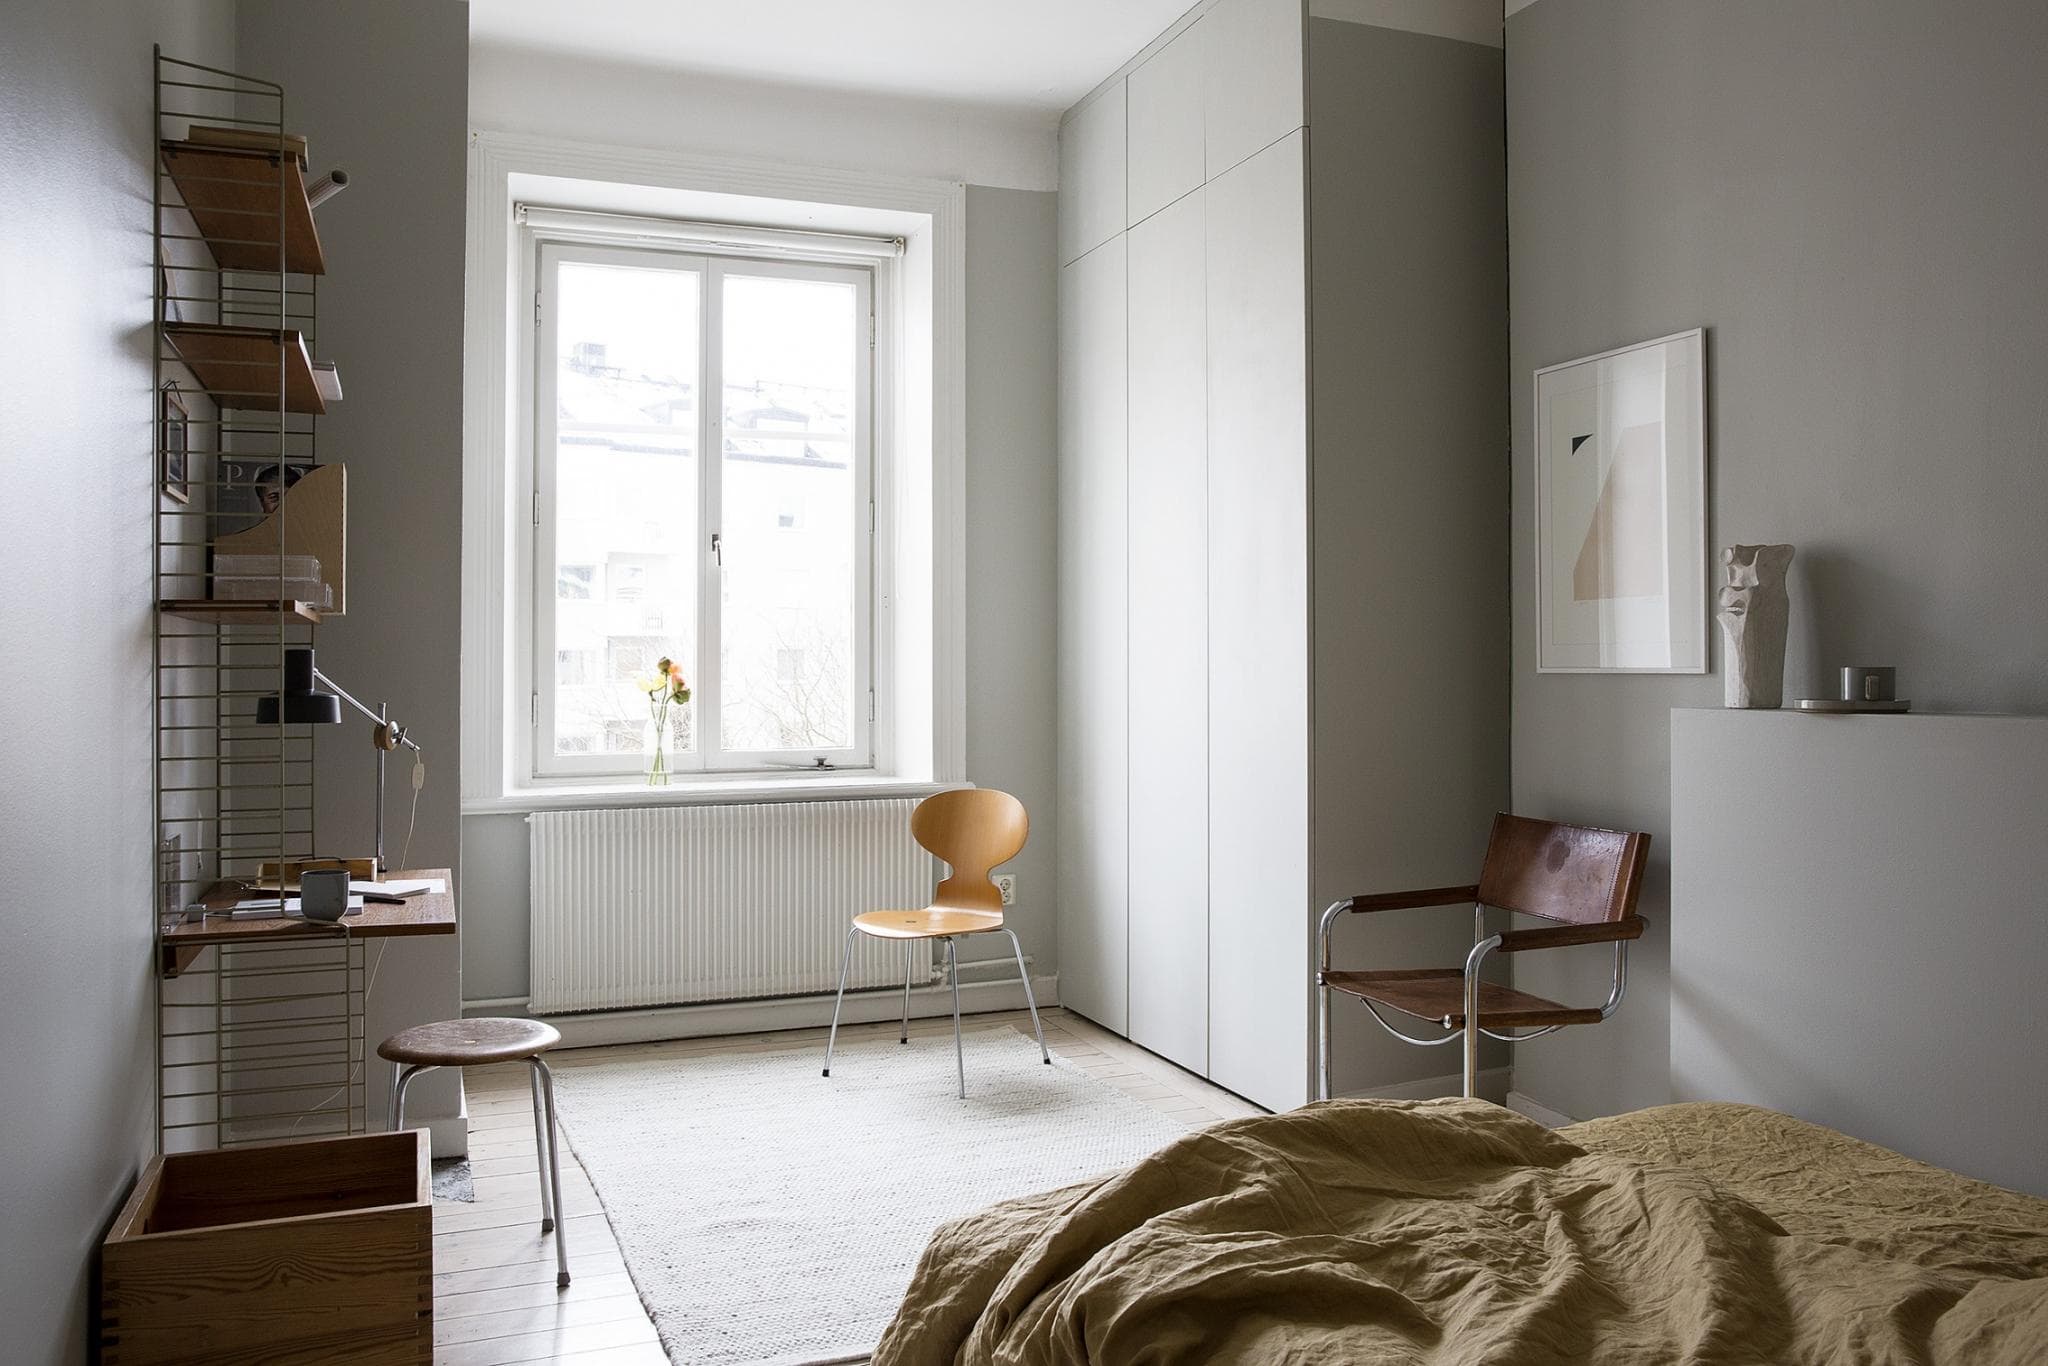 Grey bedroom with warm accents colors - COCO LAPINE DESIGNCOCO LAPINE ...